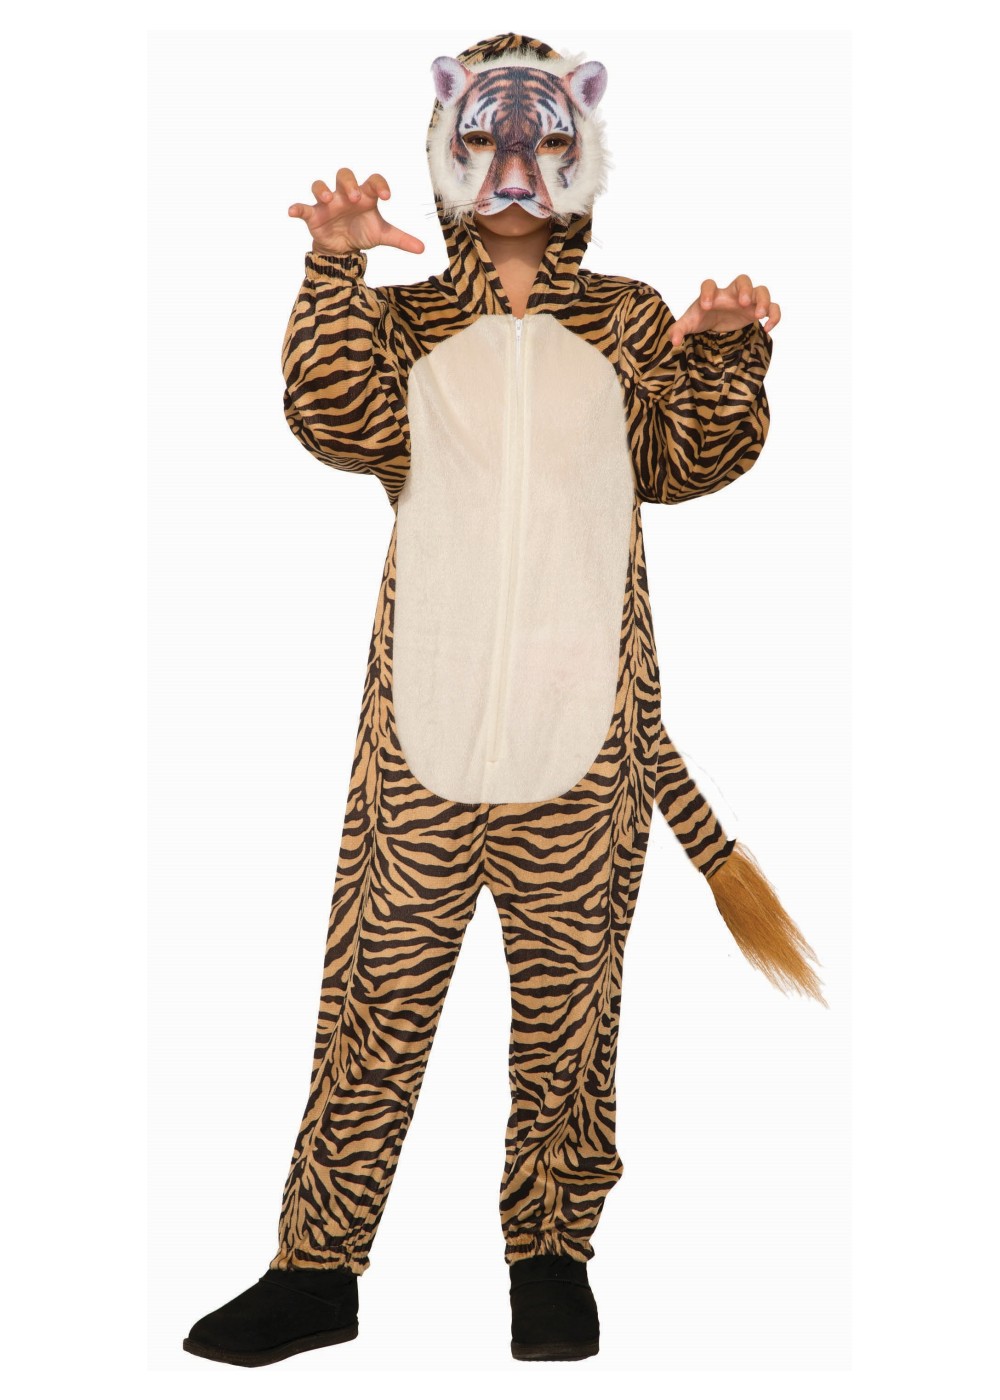 Wild Tiger Boy Costume